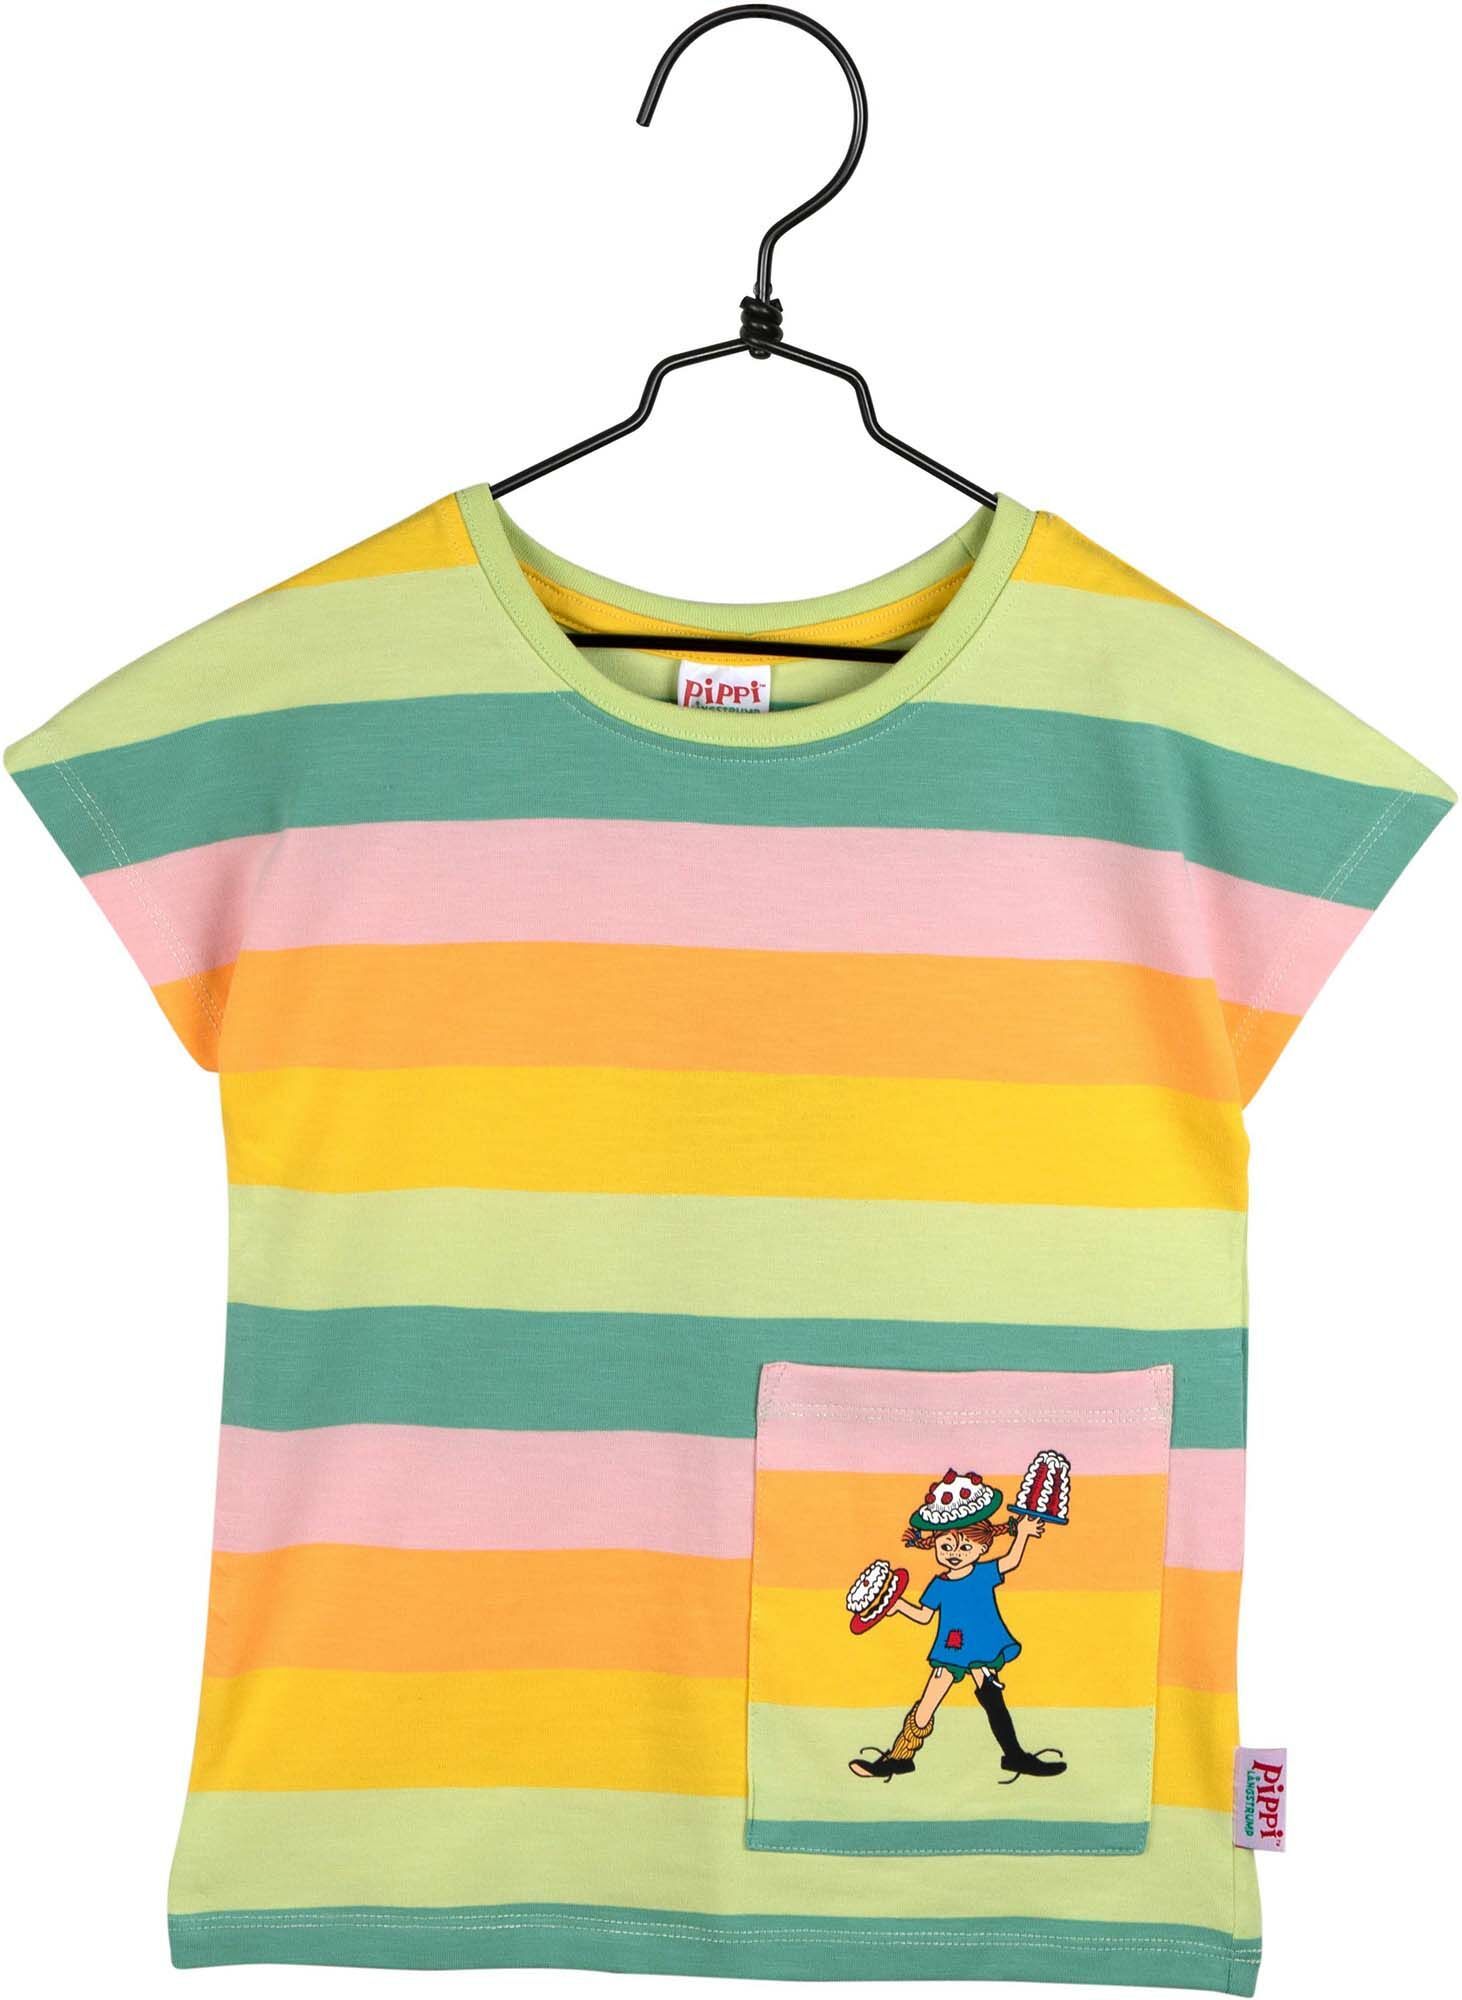 Pippi Långstrump Regnbåge T-Shirt Grön 92